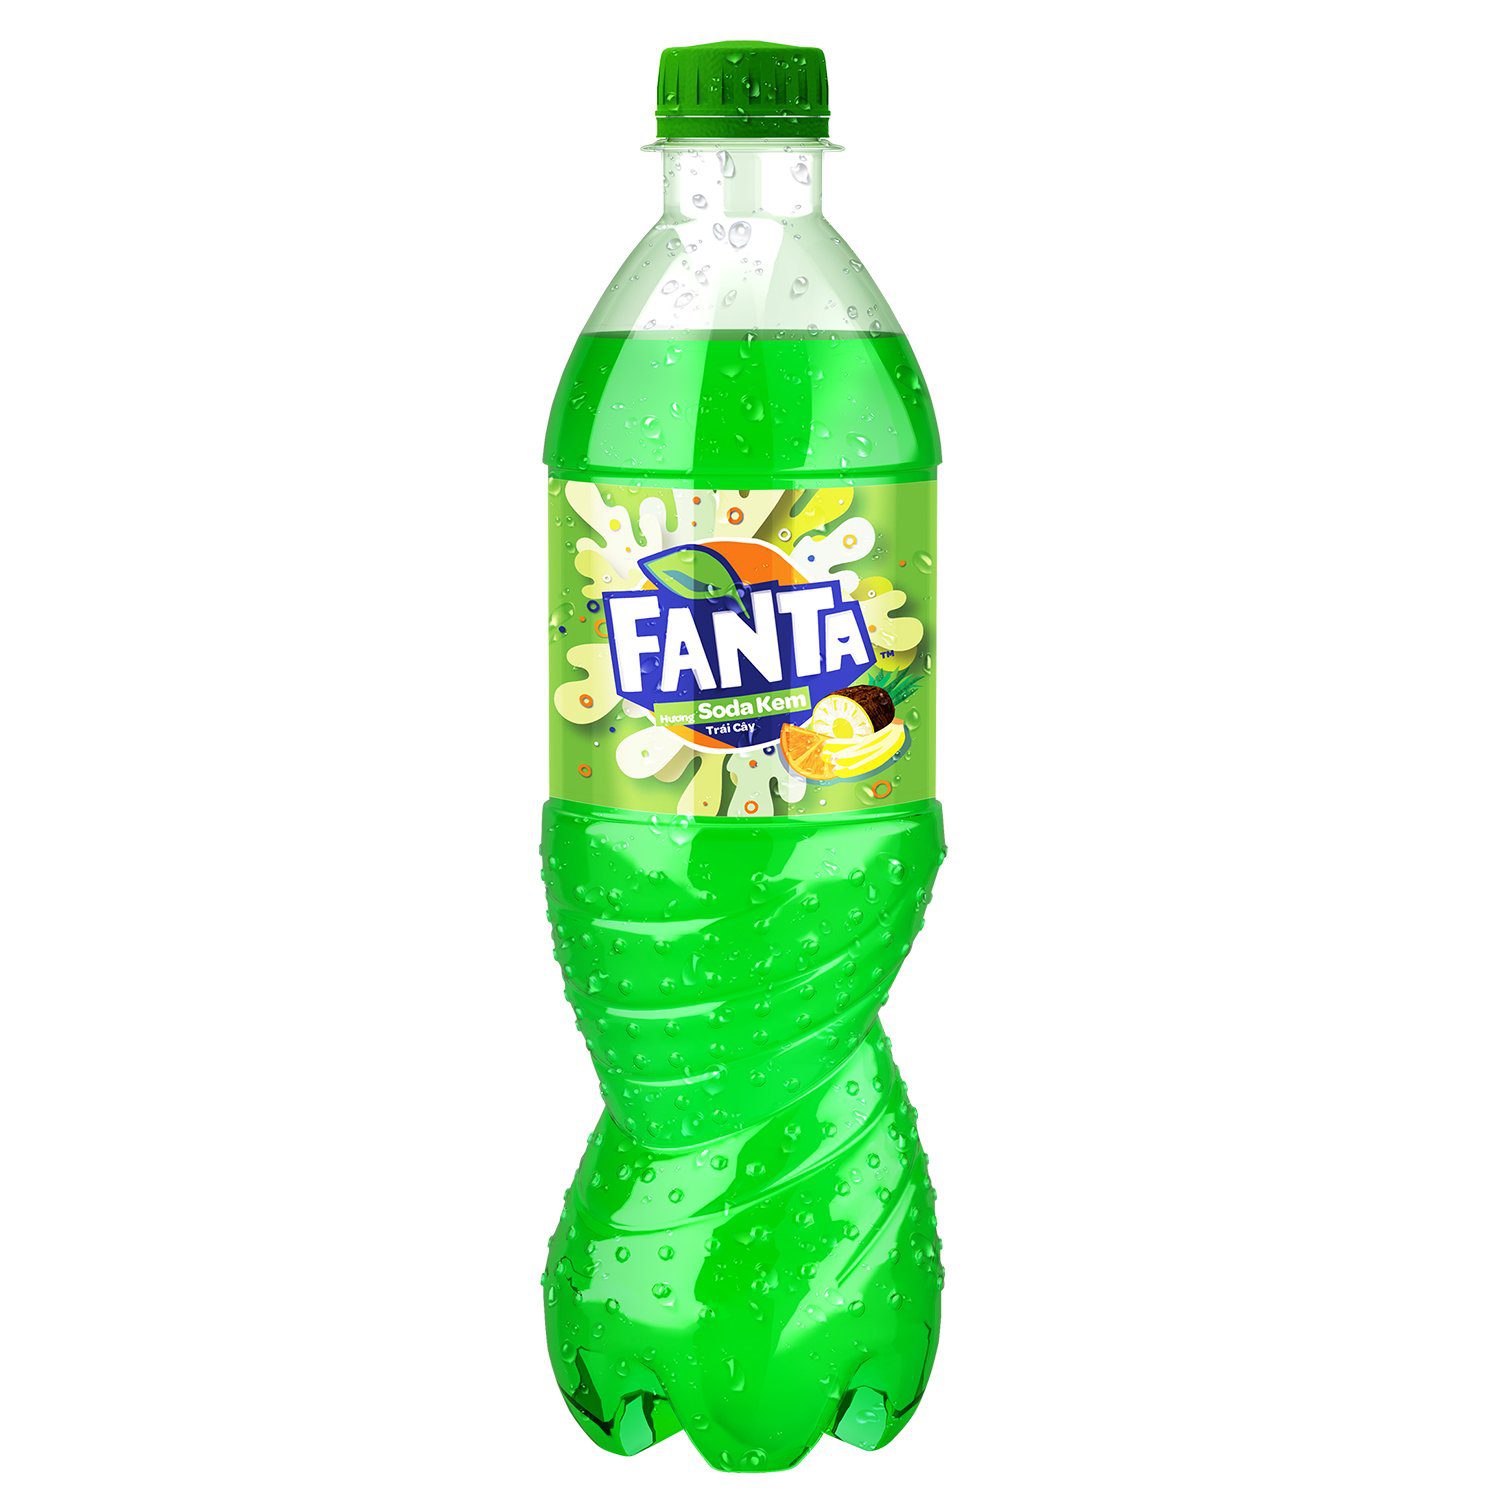 Fanta Soda Kem (Fruity Cream Soda) – 600ml